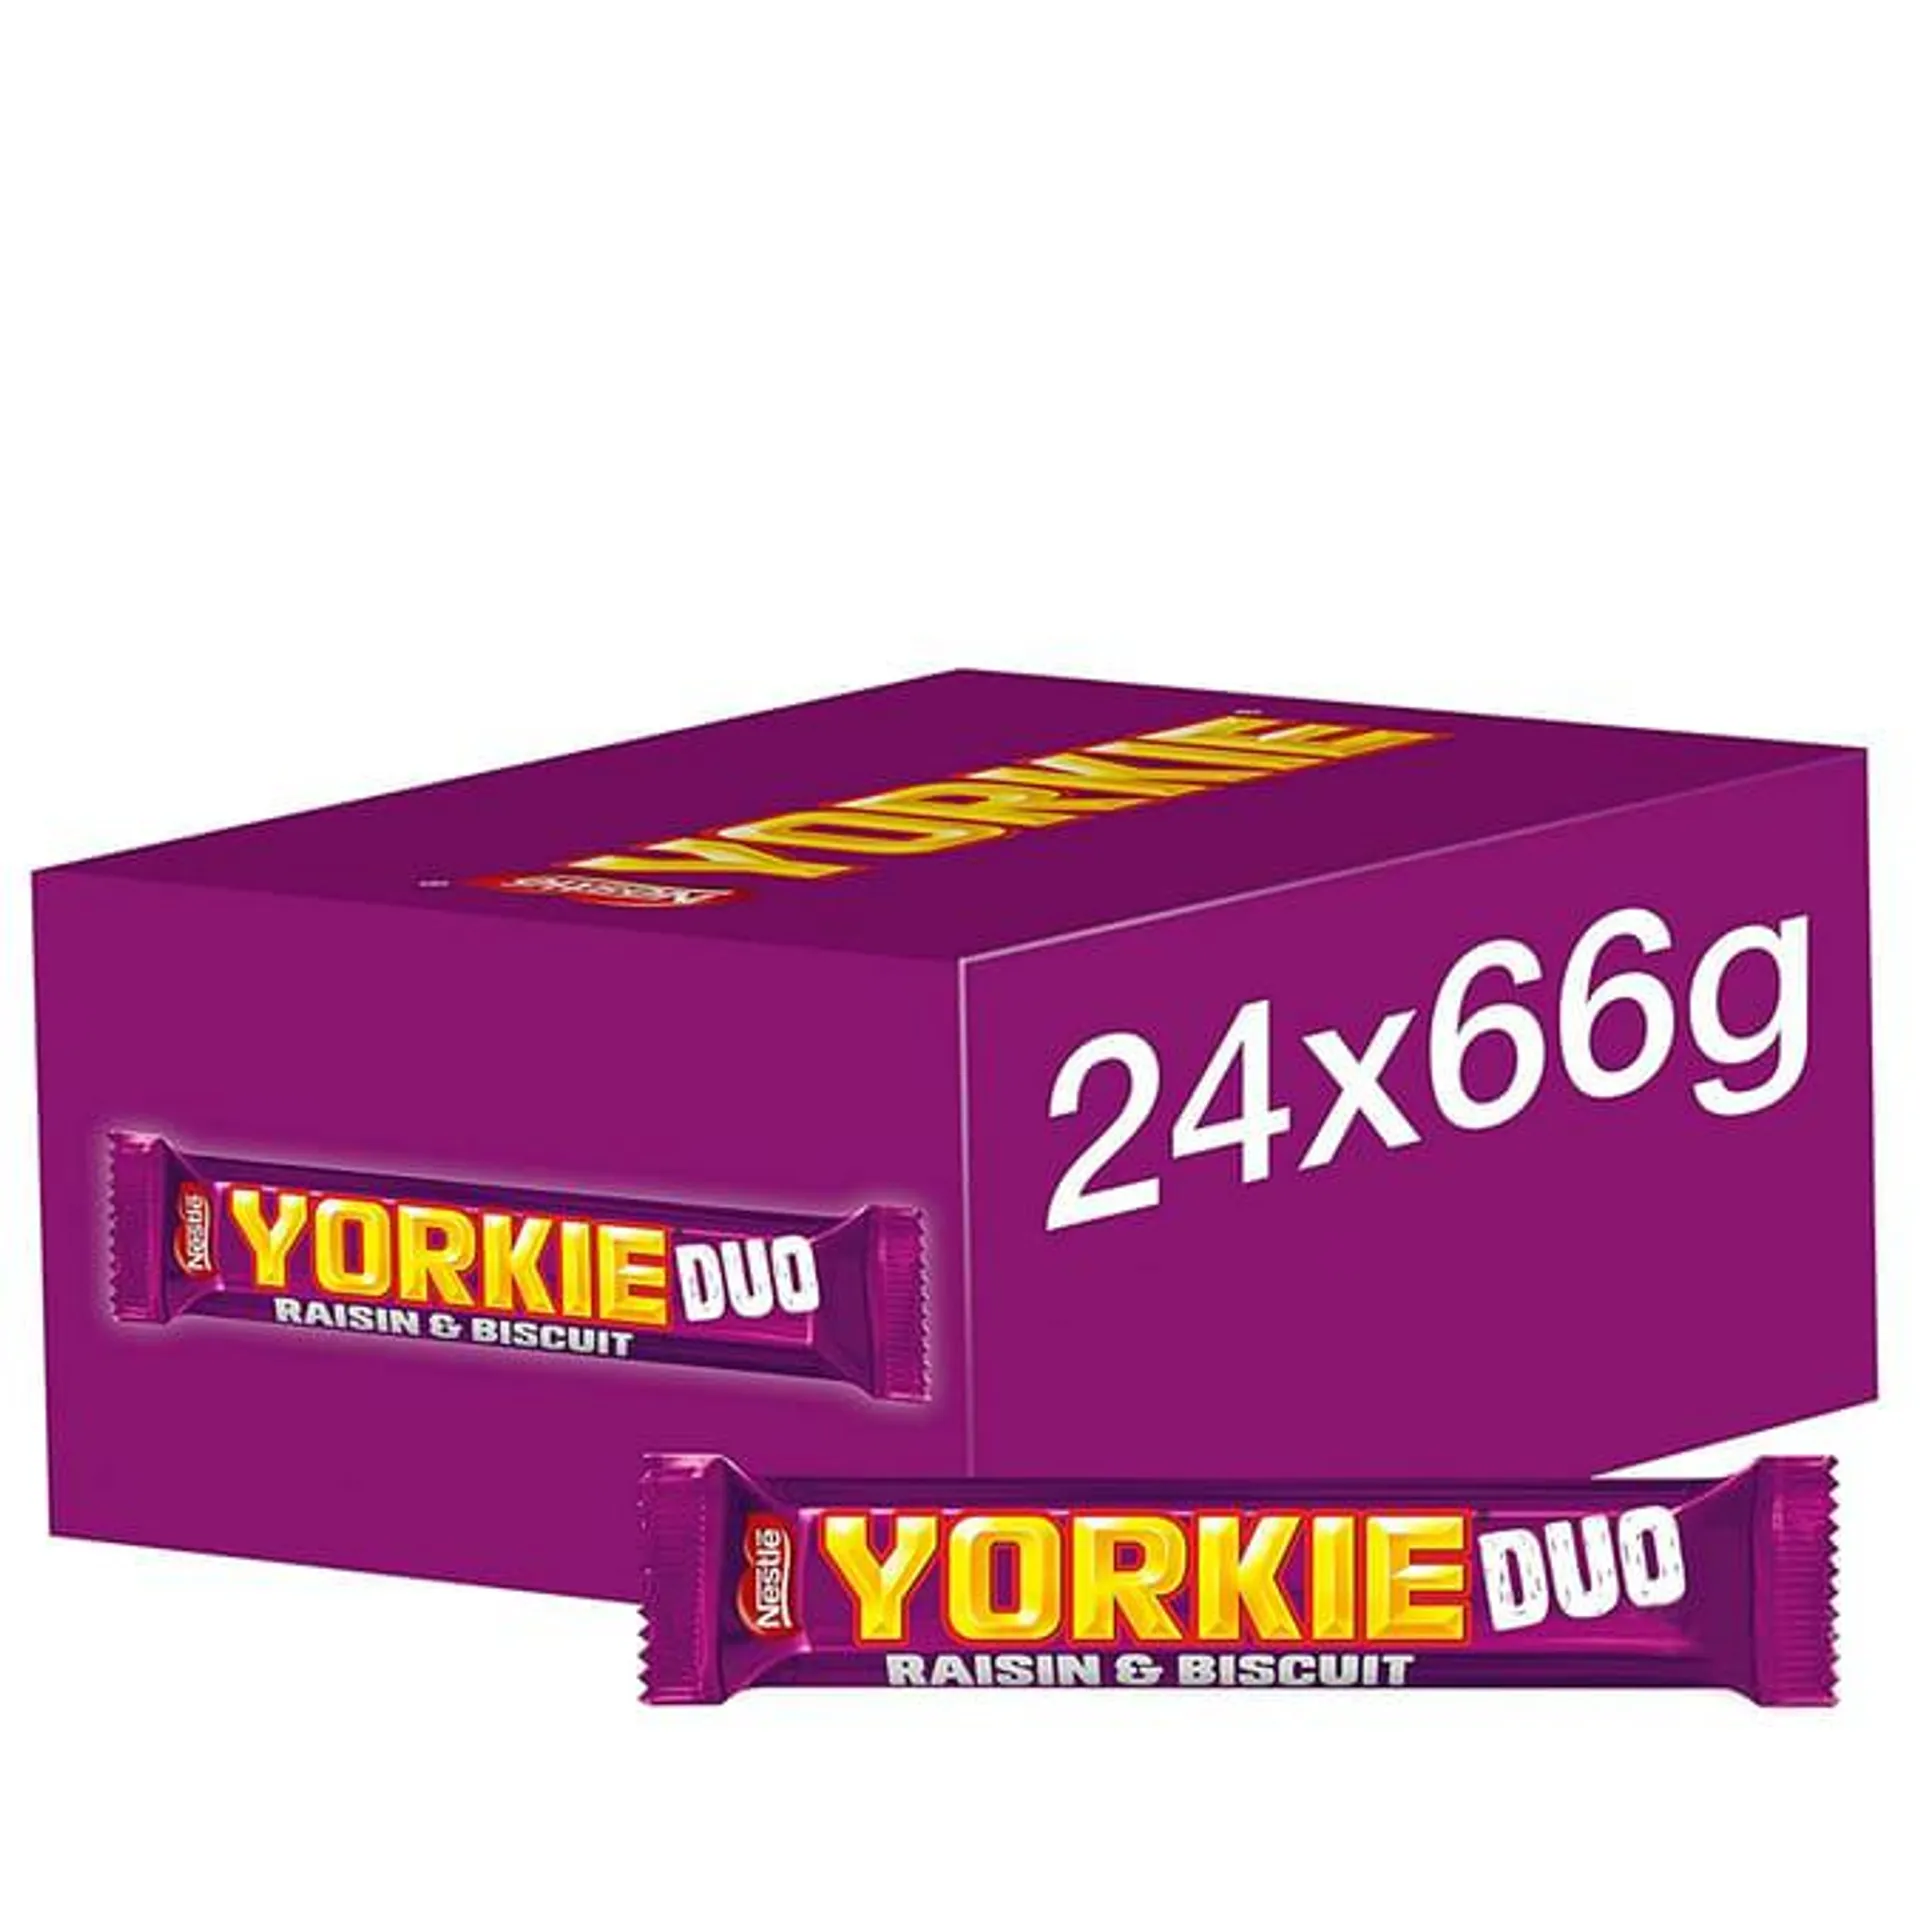 Yorkie Duo Raisin & Biscuit 66g x24